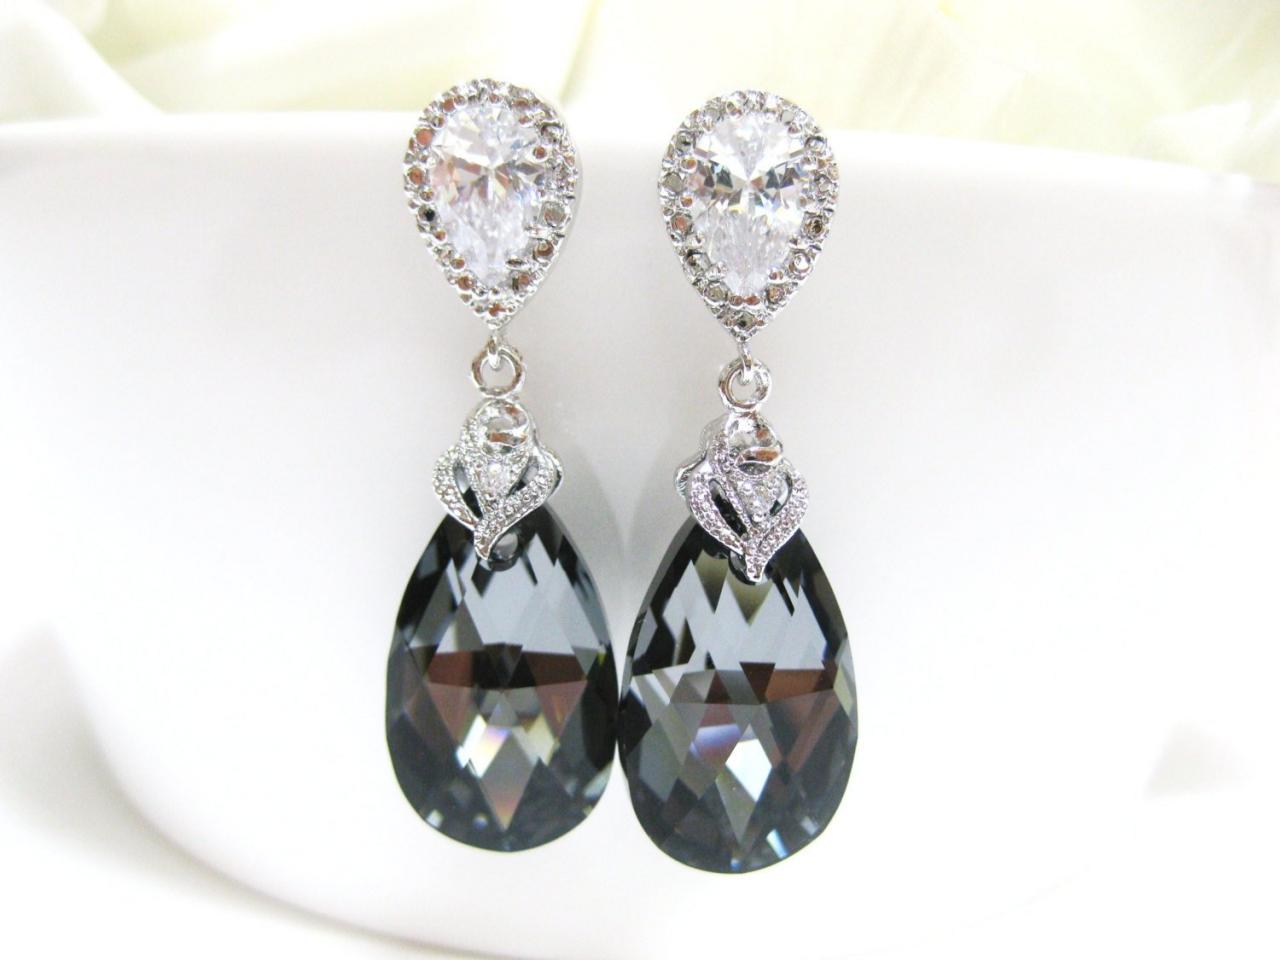 Silver Night Black Swarovski Crystal Tear Drop Earrings Wedding Bridesmaid Earrings Bridal Jewelry Sterling Silver Ear Posts (e015)